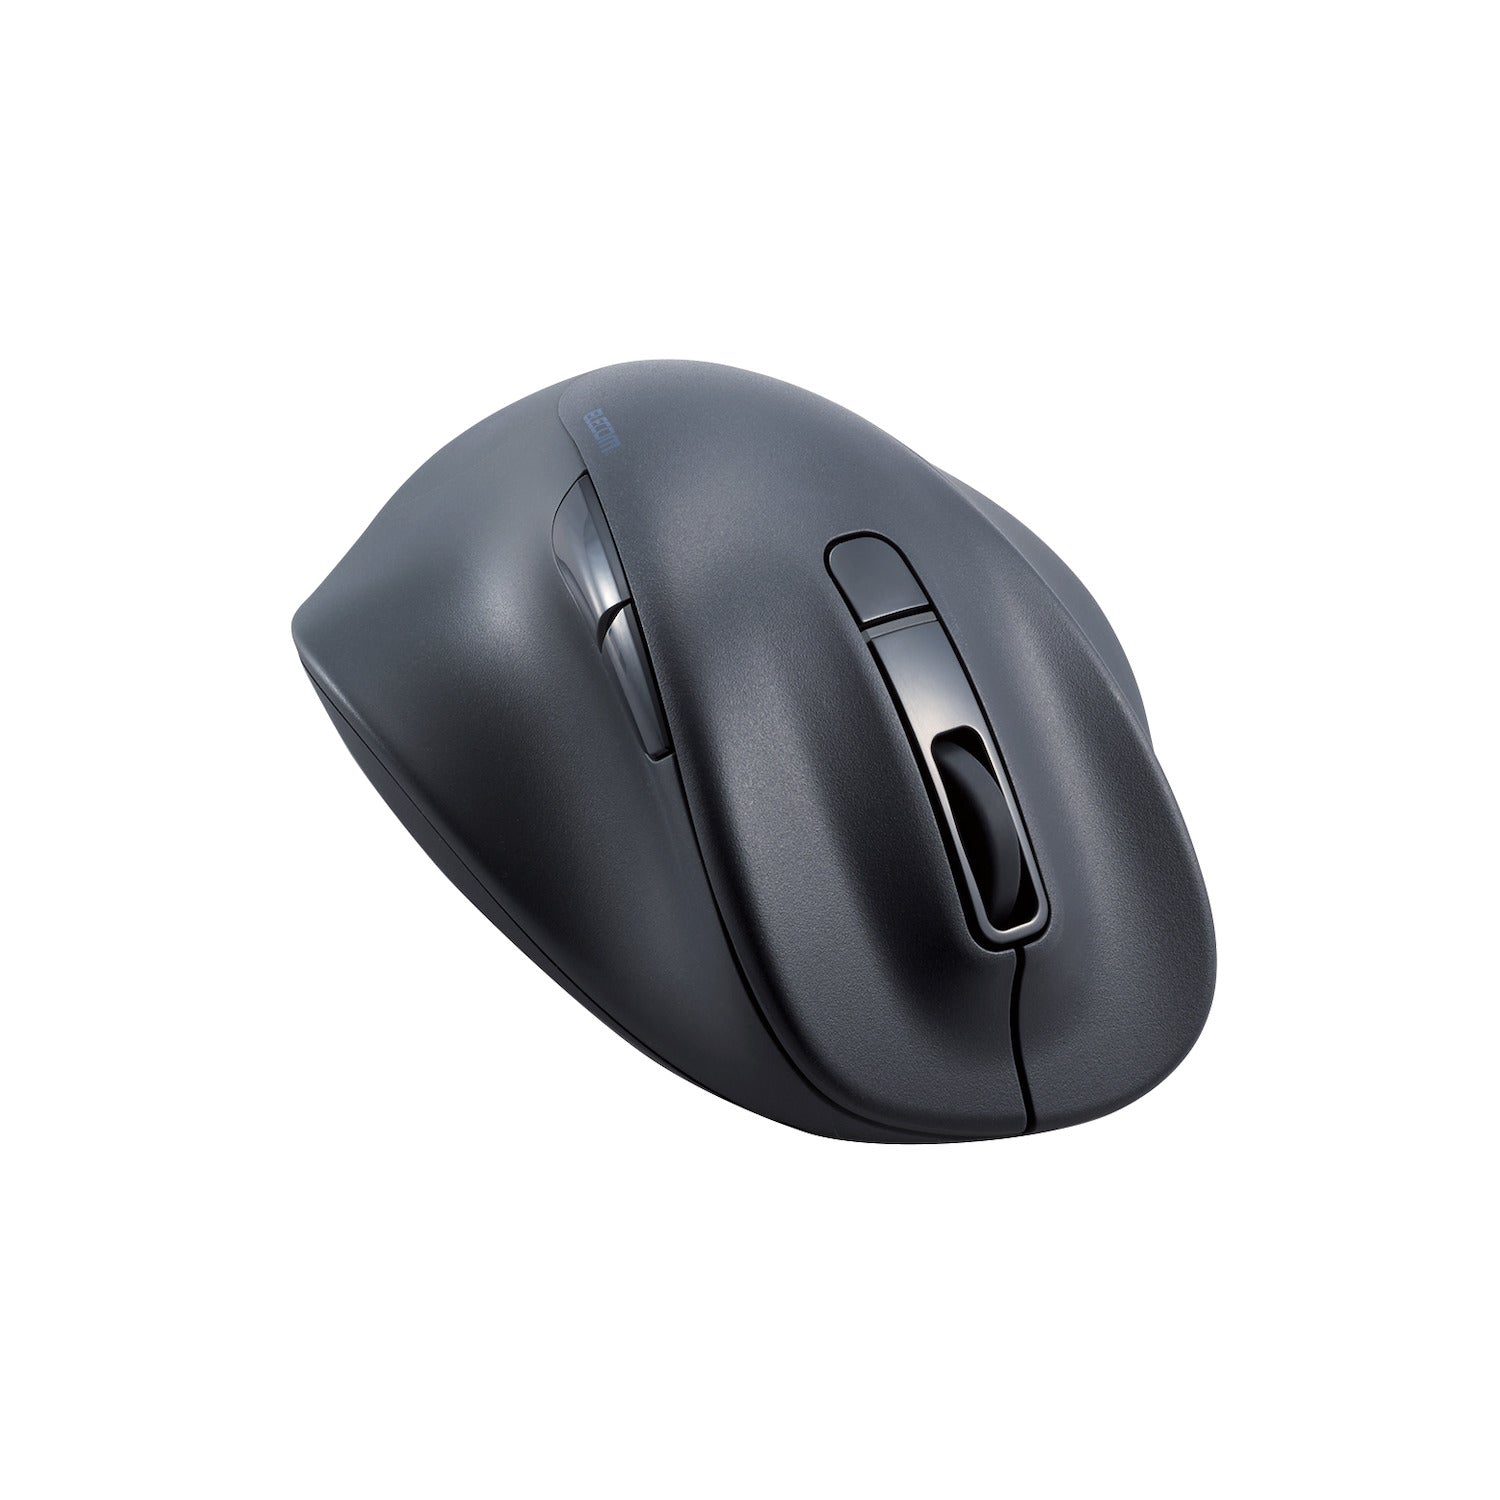 EX-G Bluetooth Ergonomic Left-handed Mouse